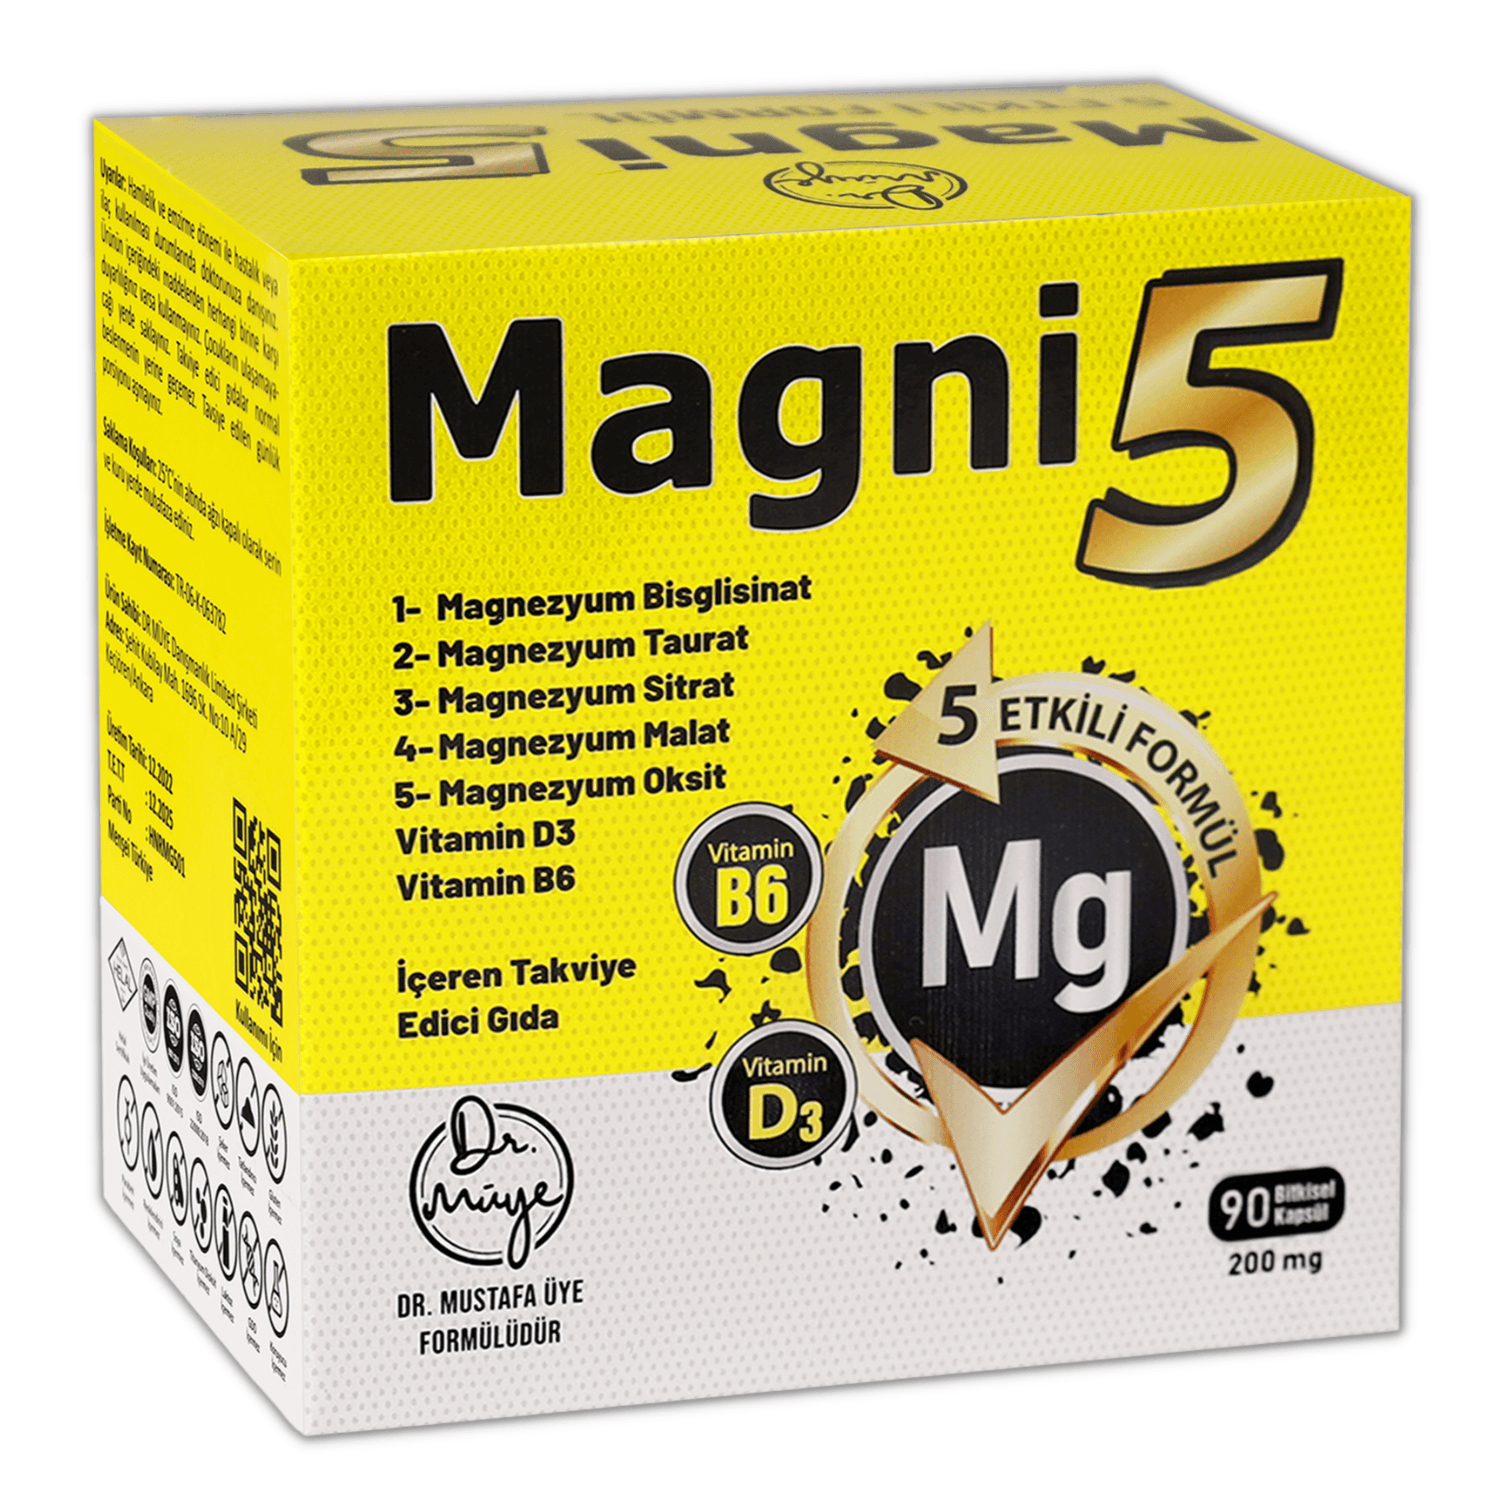 Magni5 - 5 Etkili Formül (3 Aylık)